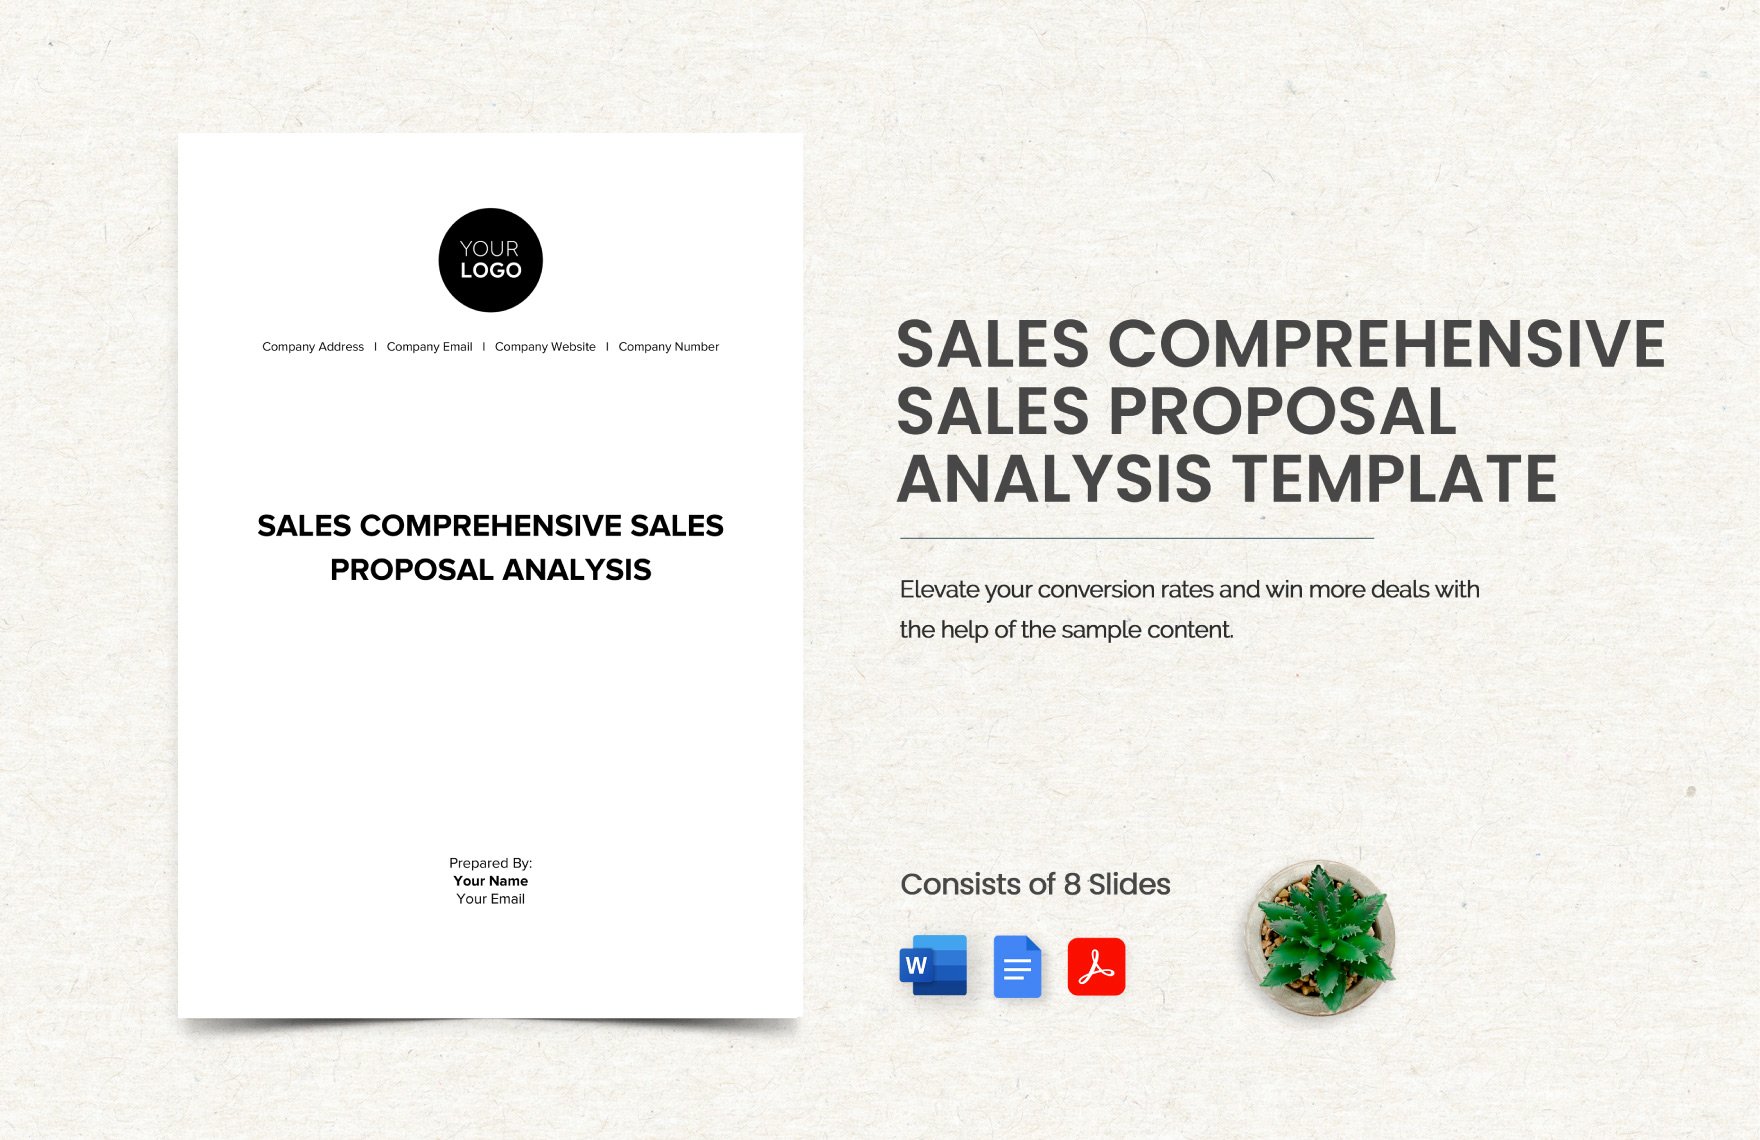 Sales Comprehensive Sales Proposal Analysis Template